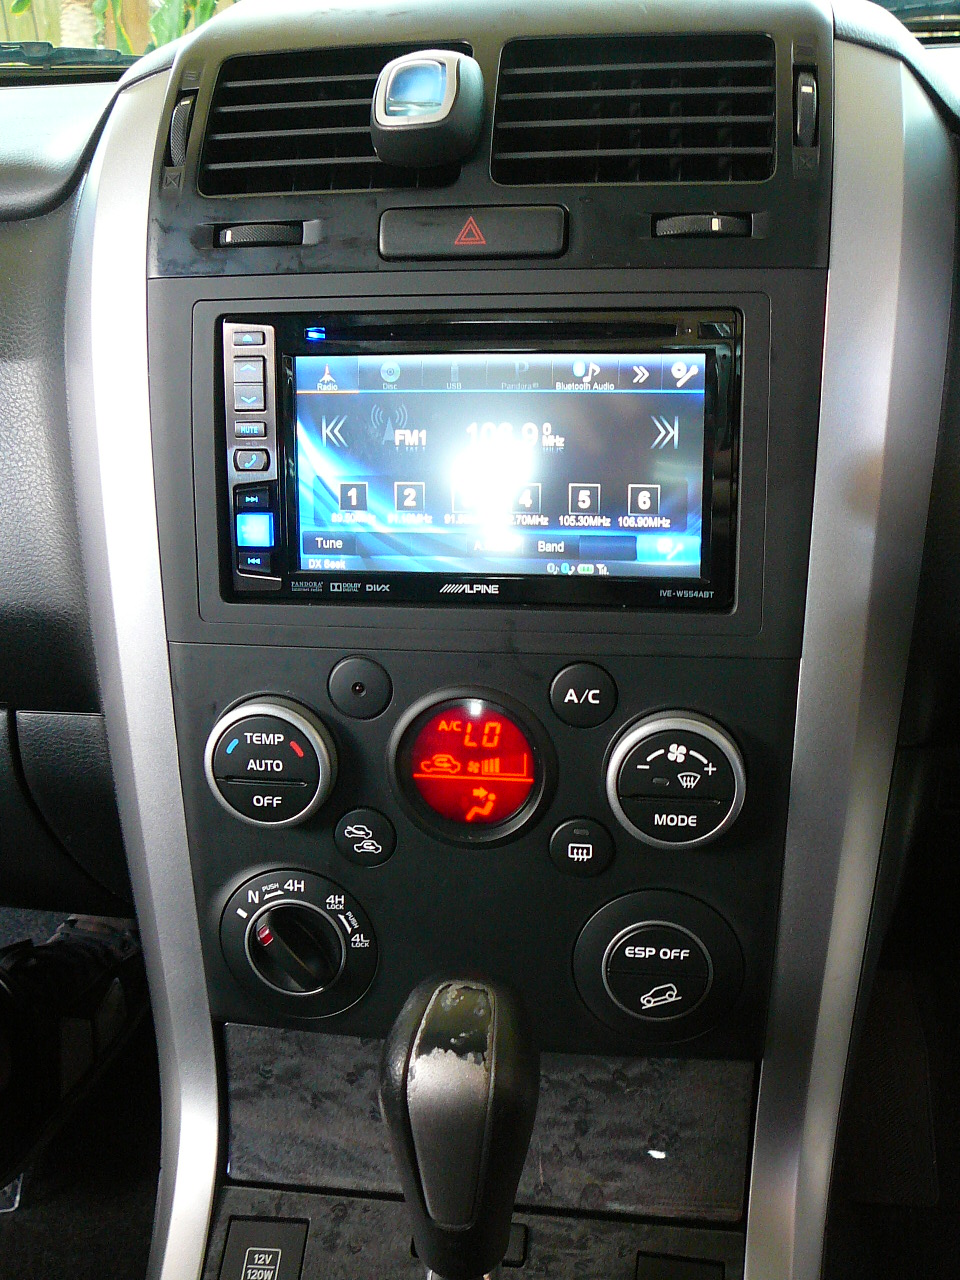 Suzuki Grand Vitara, Alpine IVE-W554ABT Installation of Audio Visual Unit & Dash Fascia